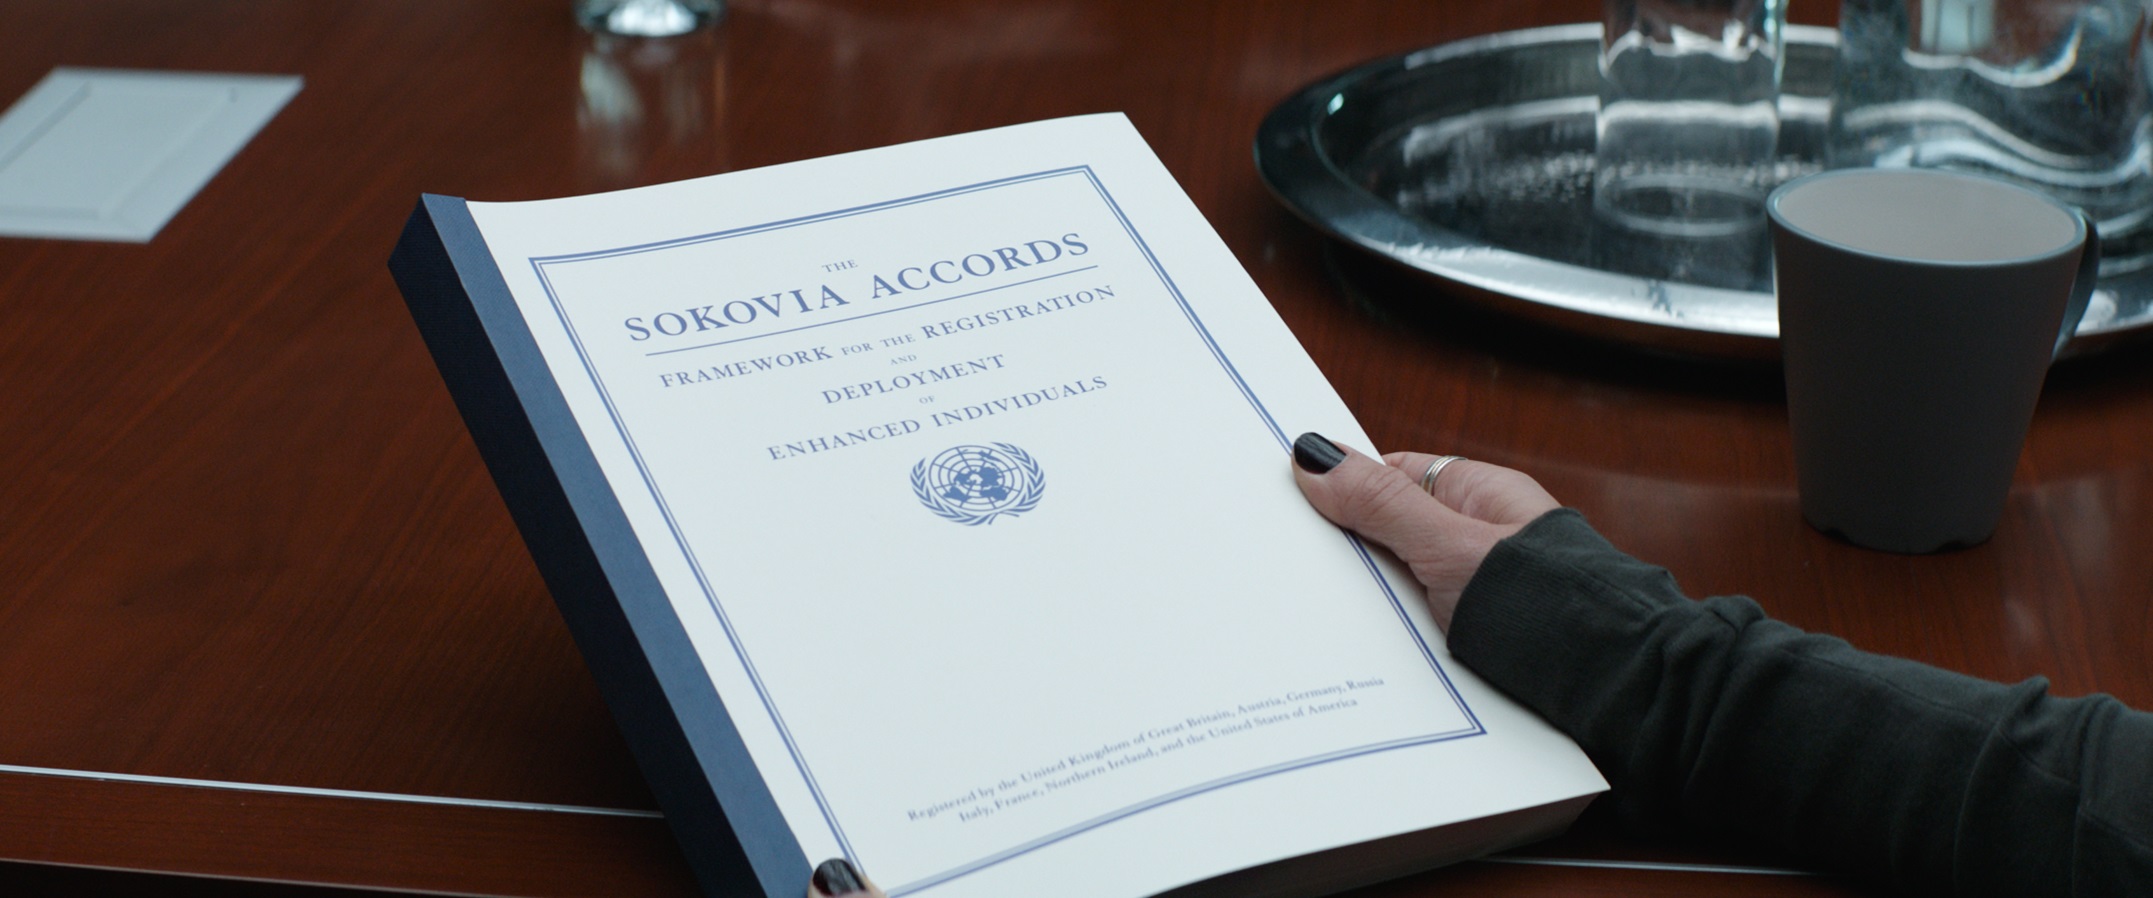 The Sokovia Accords